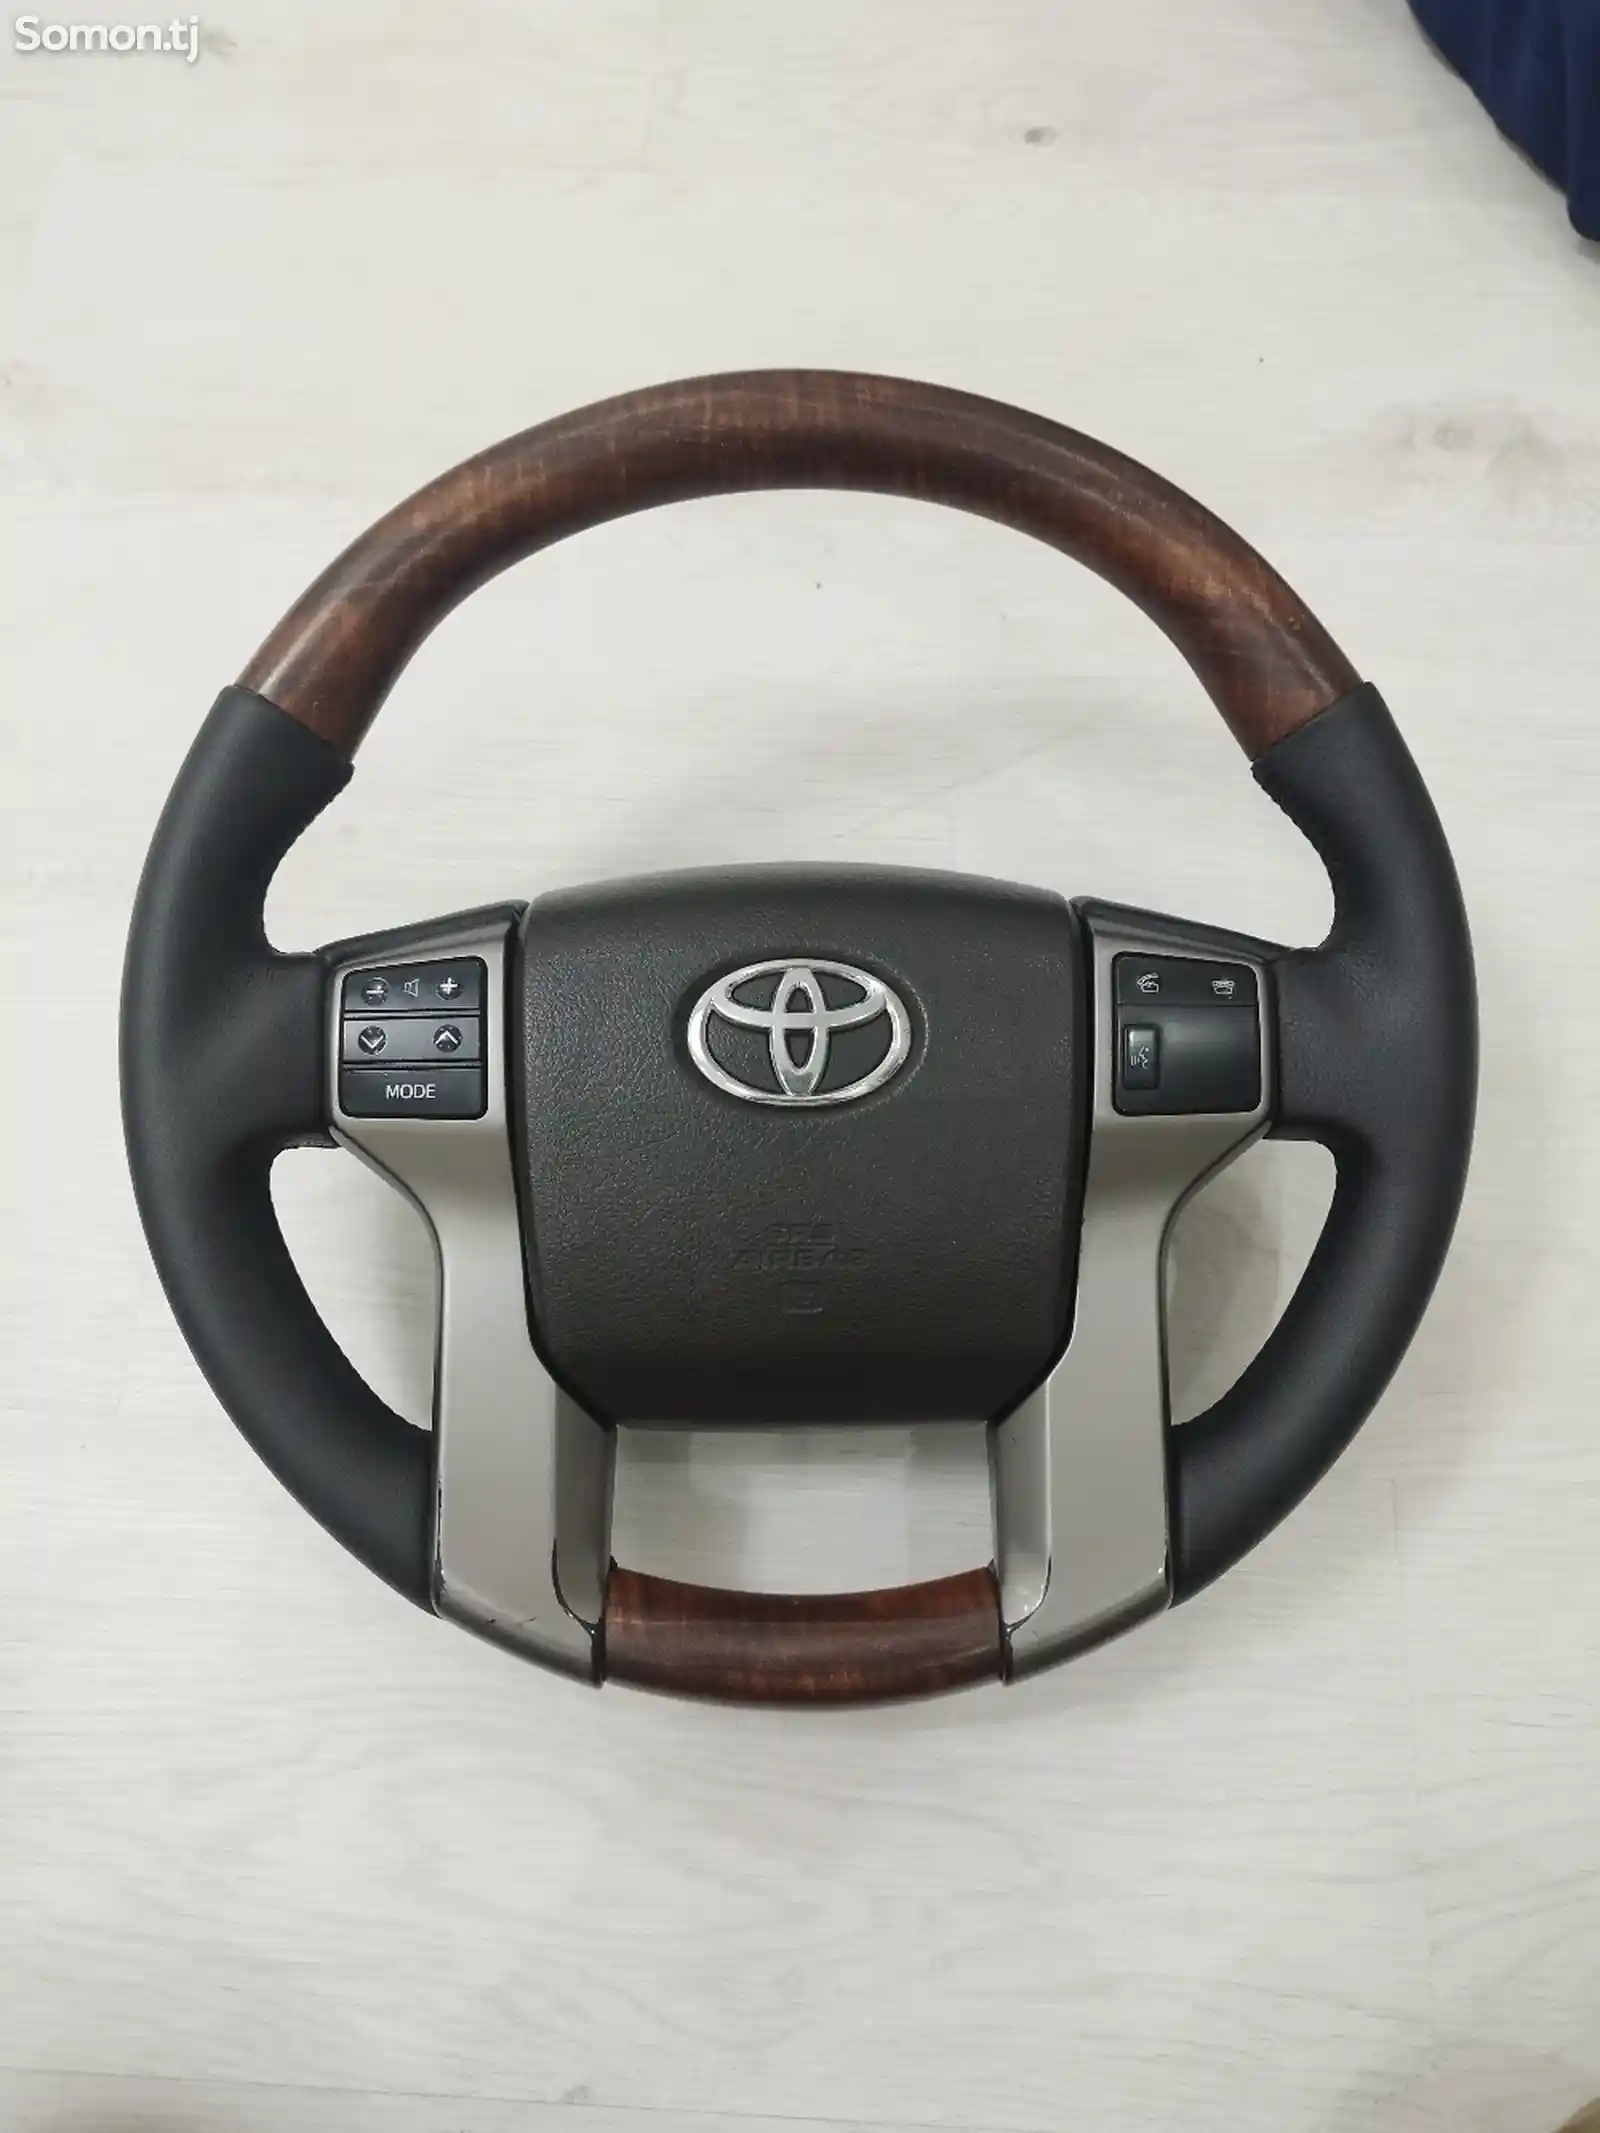 Руль от Toyota Land Cruiser Prado 150